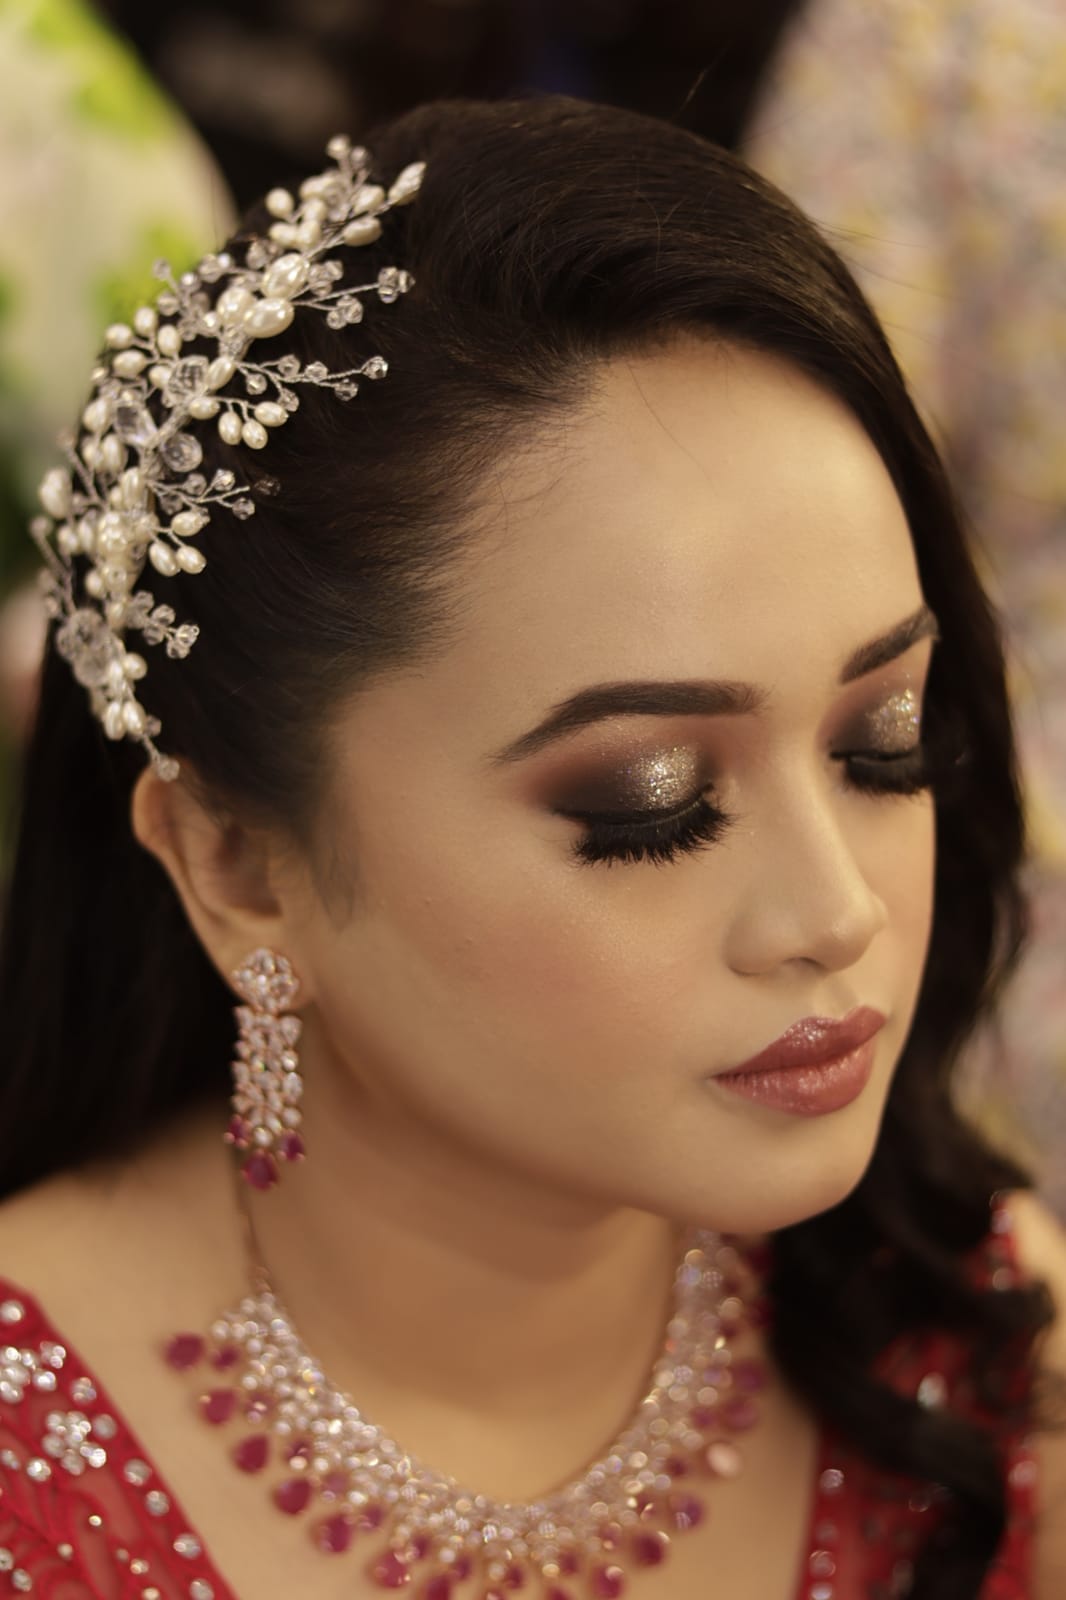 nancy-madaan-makeup-artist-delhi-ncr